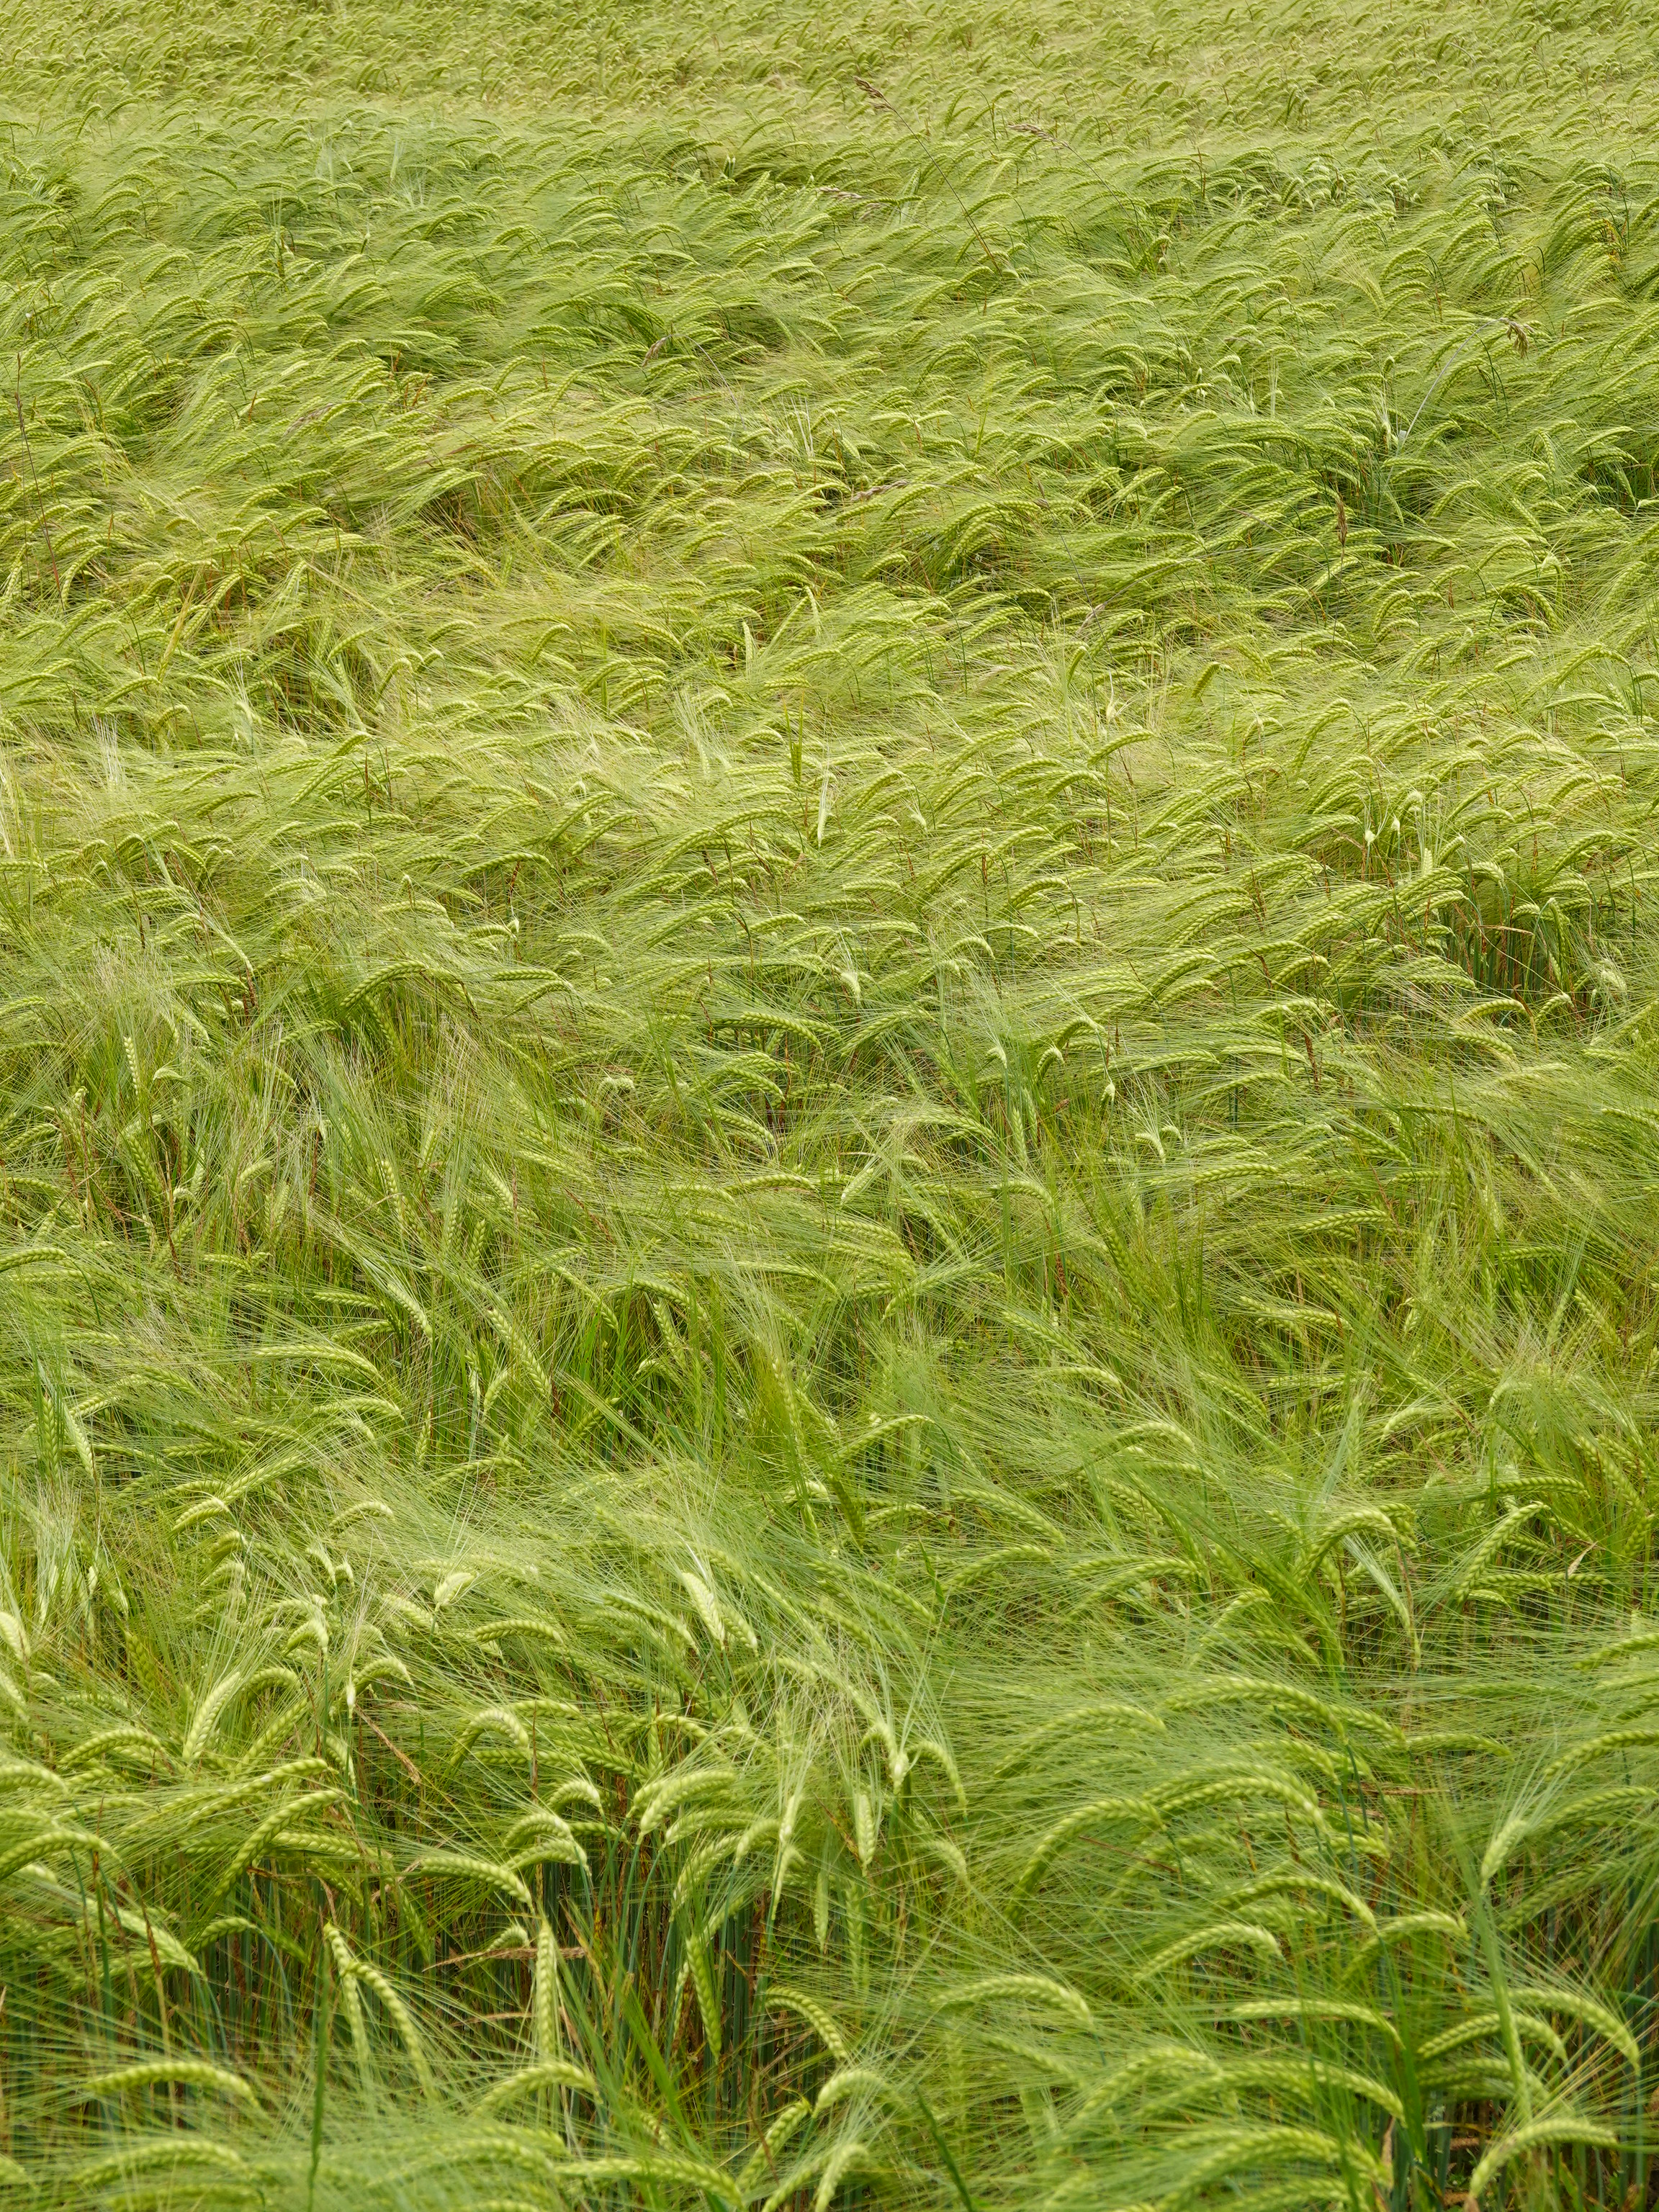 Wheat Ears Field Nature